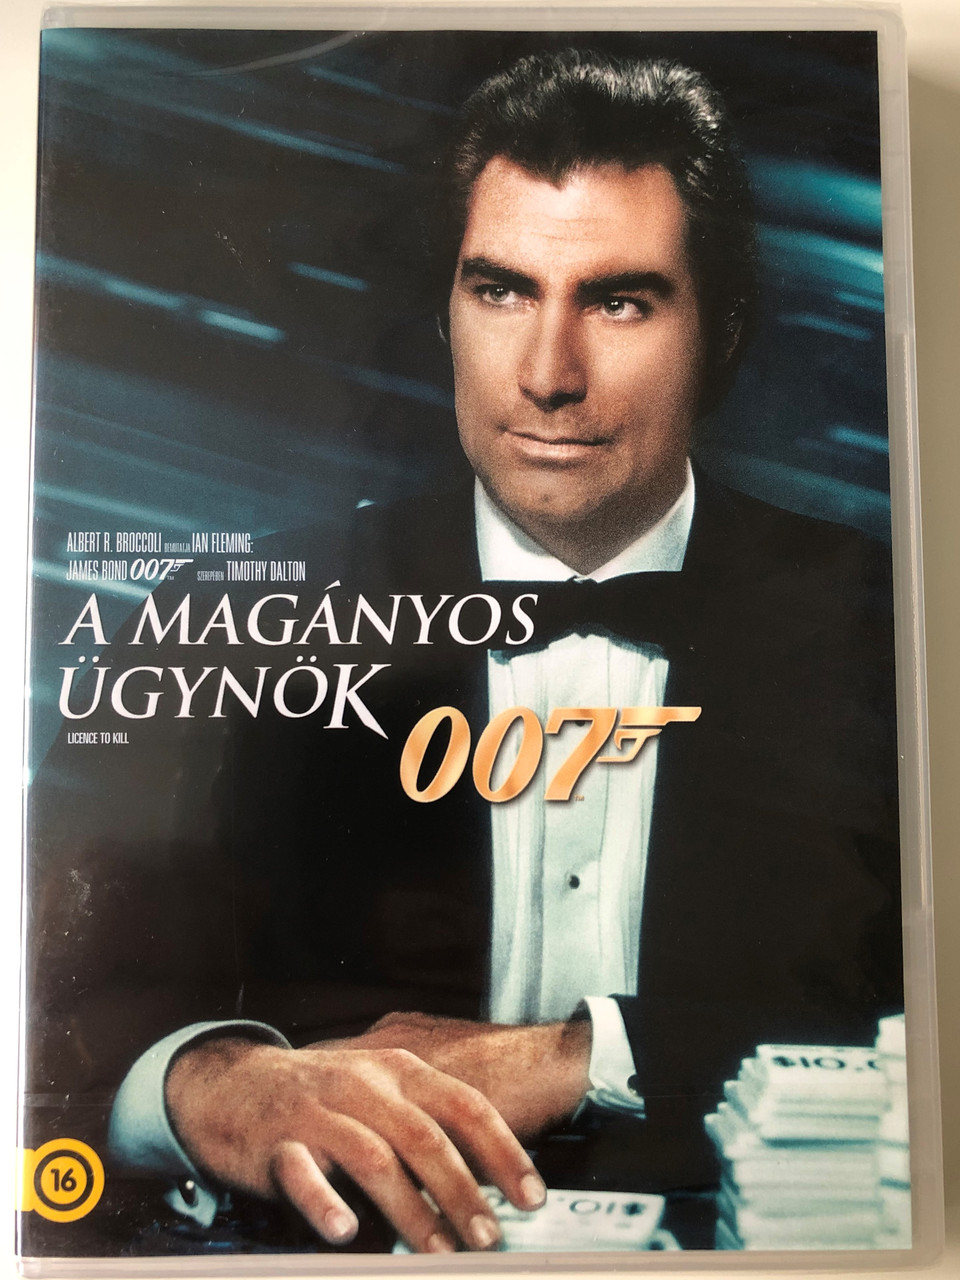 Licence to kill - James Bond 007 DVD 1989 A magányos ügynök / Directed ...